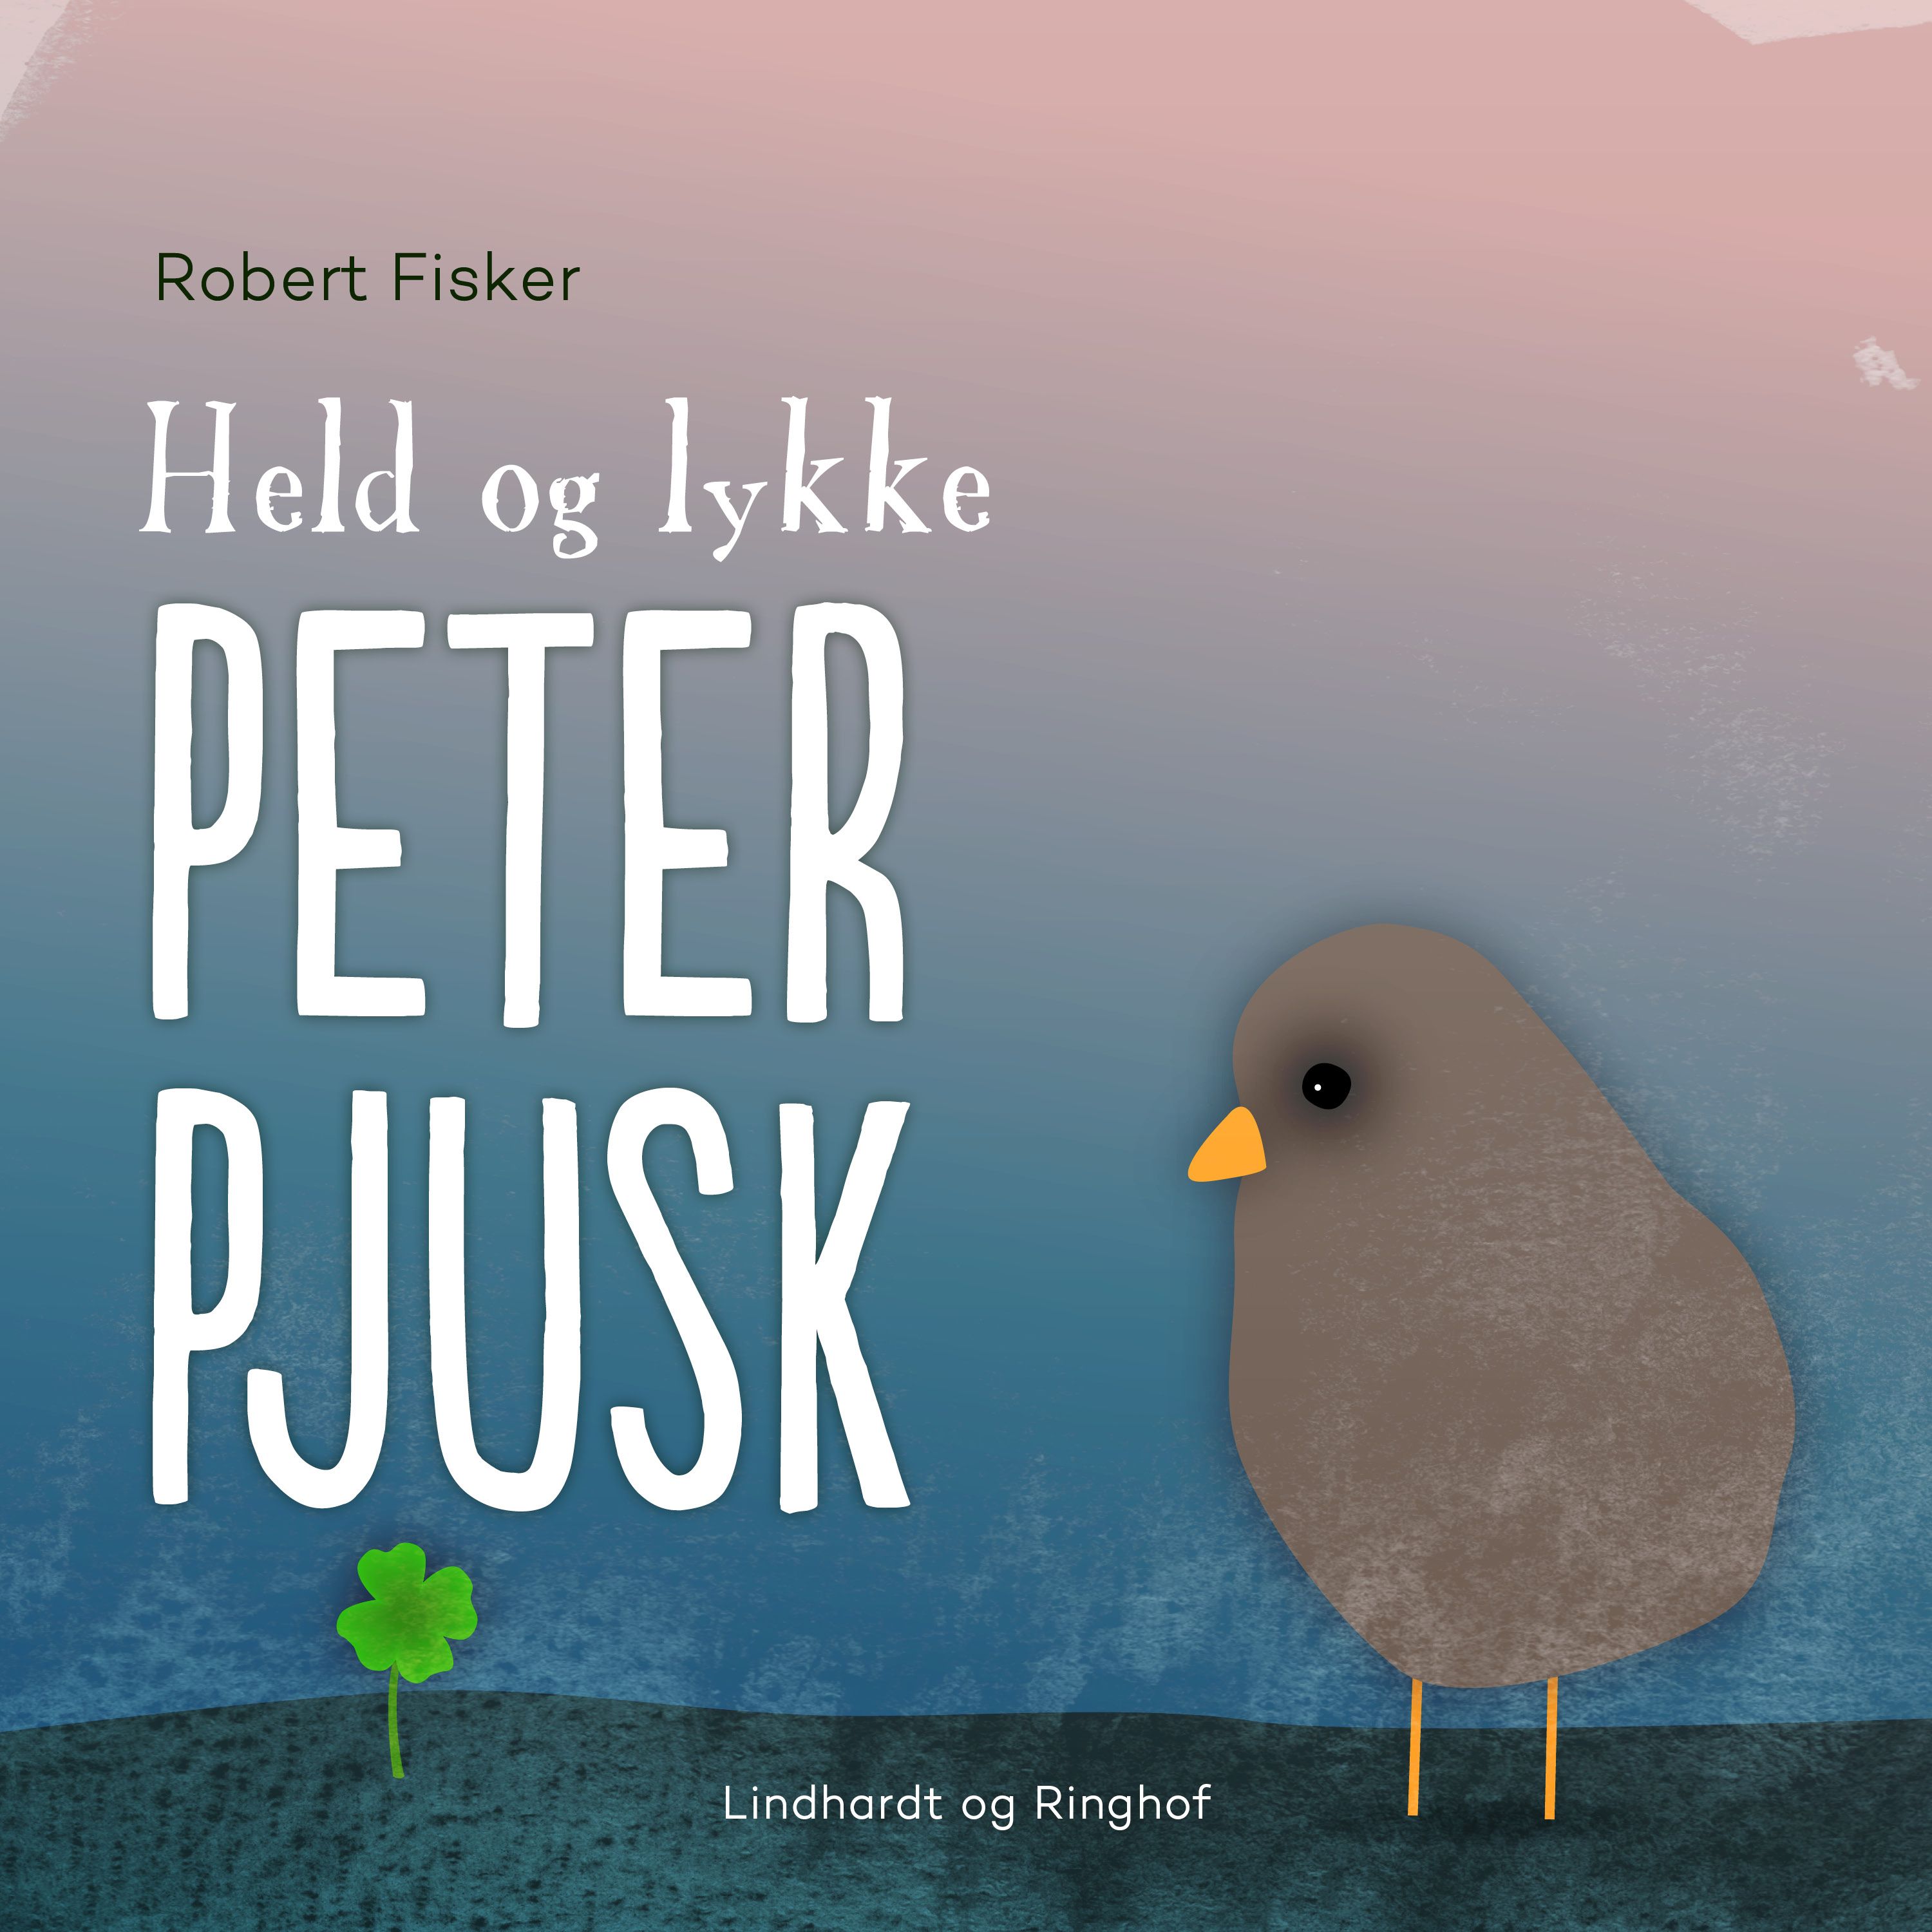 Held og lykke, Peter Pjusk, audiobook by Robert Fisker